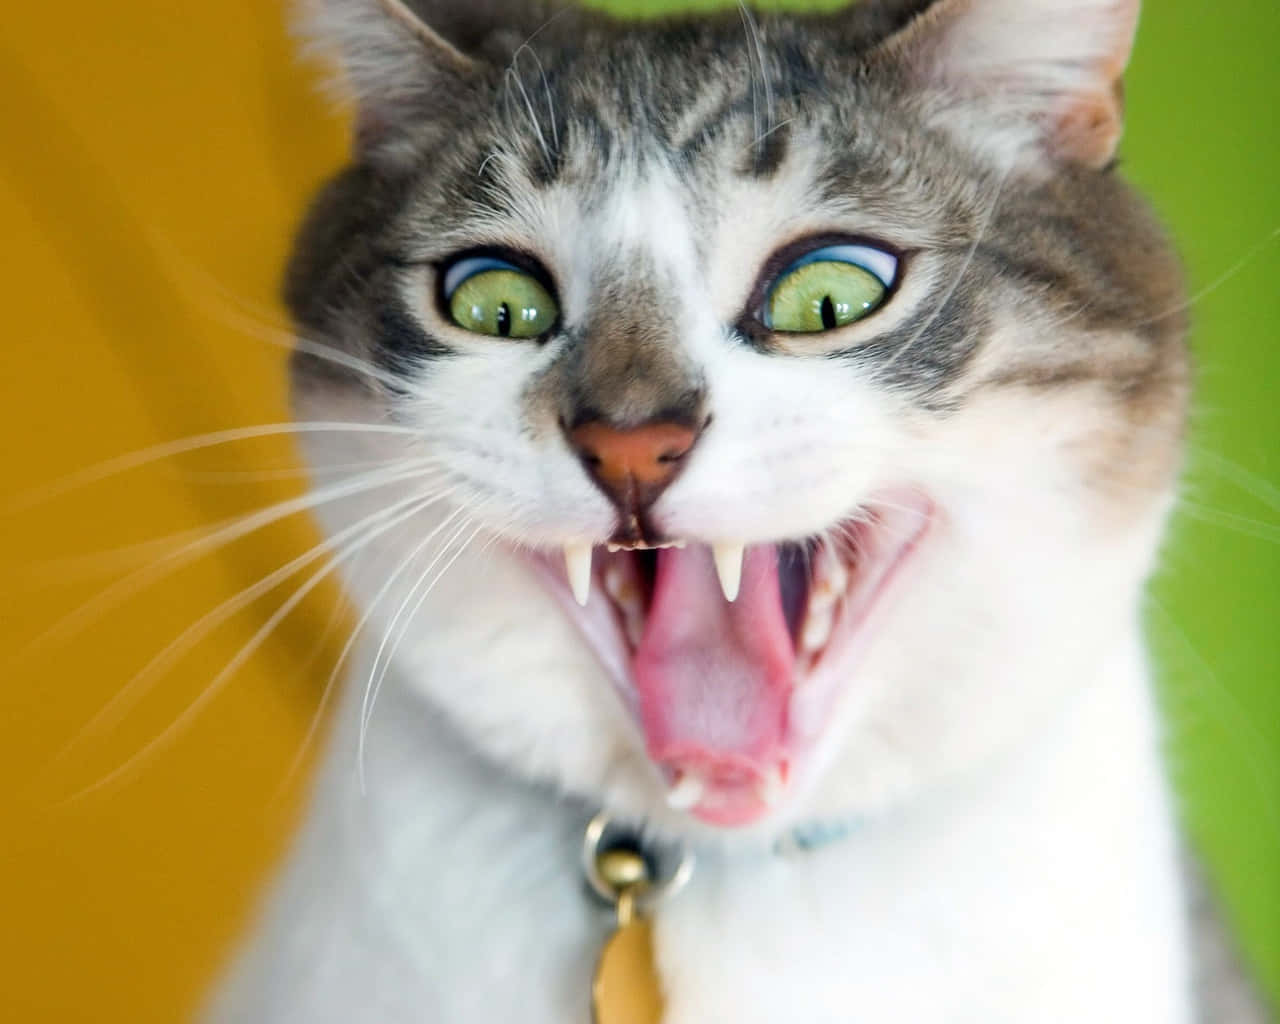 Weird Cat Fang Mouth Open Picture